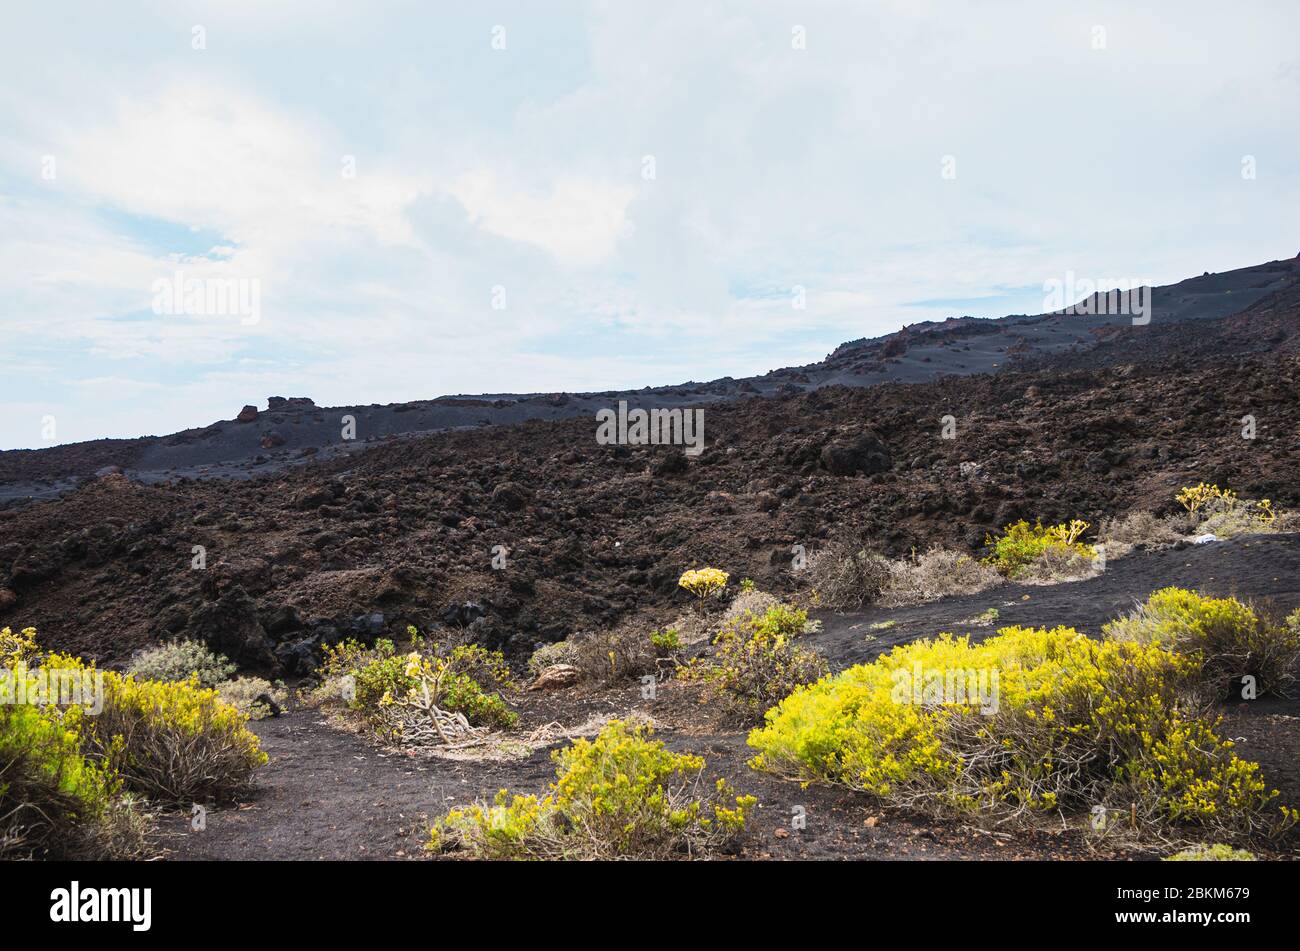 Malpaís (lava fields) landscape at the foot of the Volcán de San Antonio volcano in La Palma, Canary Islands Stock Photo